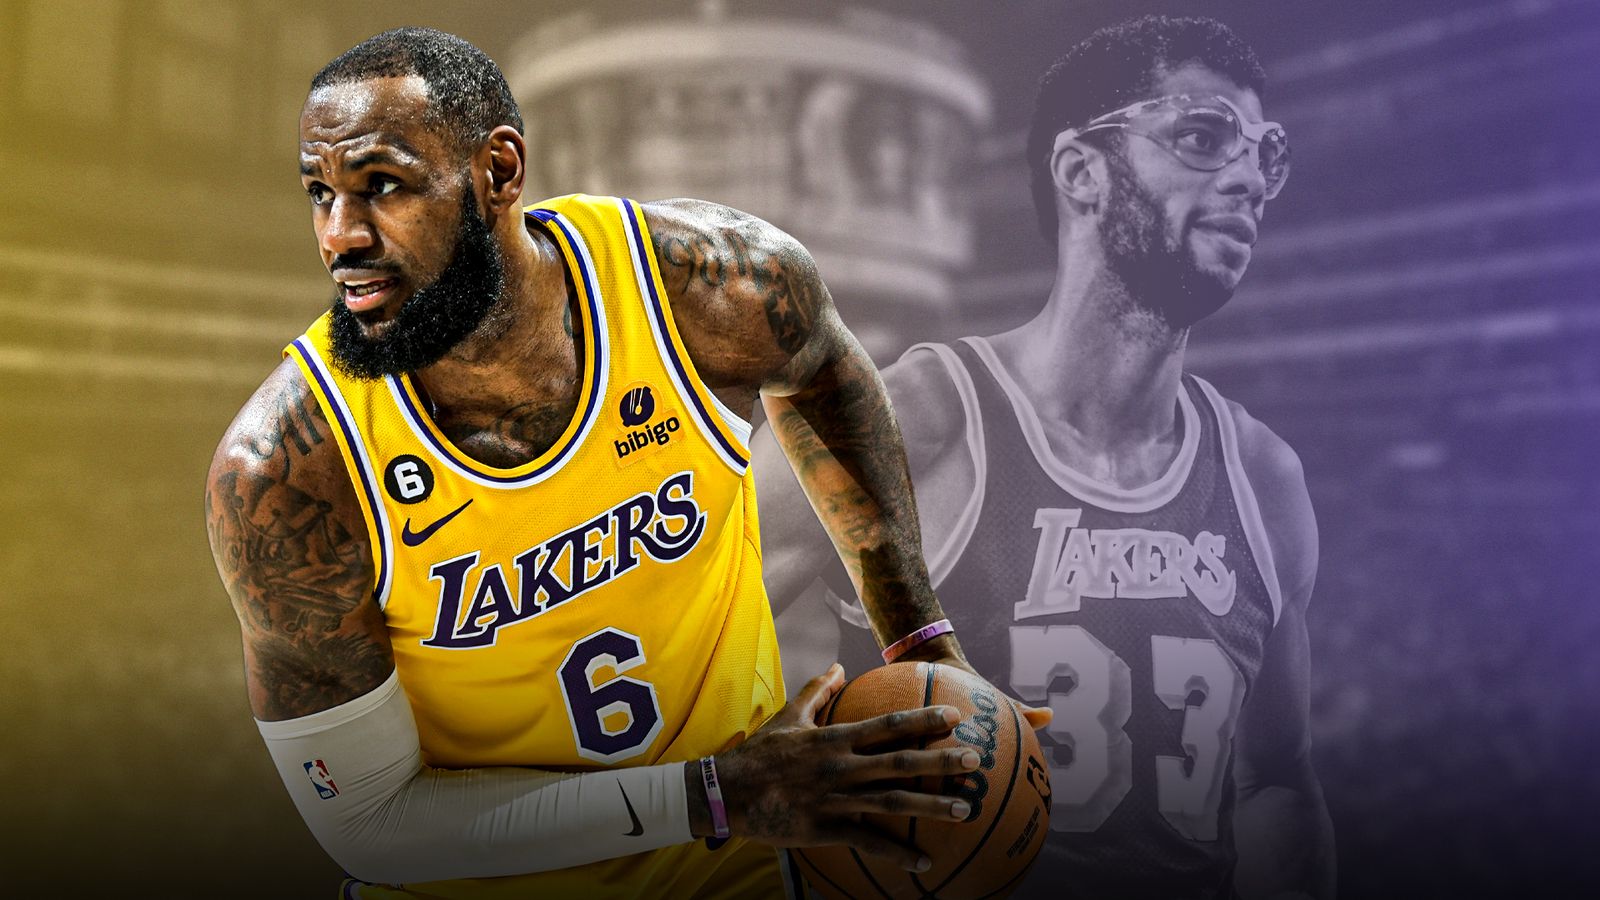 LeBron James Lakers 6 nba shirt wallpaper  Lebron james lakers, Nba  shirts, Lebron james wallpapers